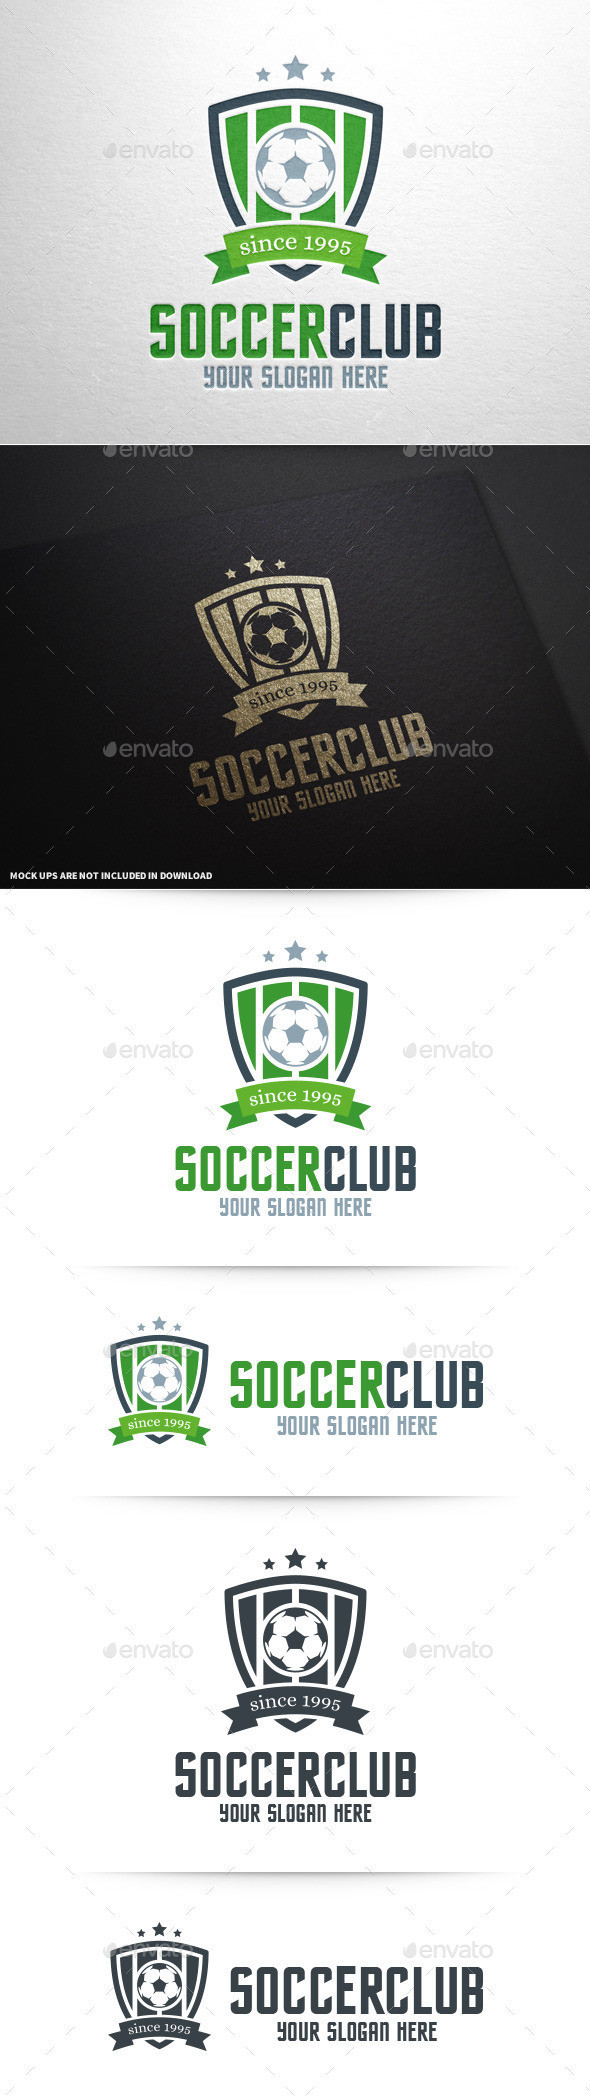 Soccer club logo template